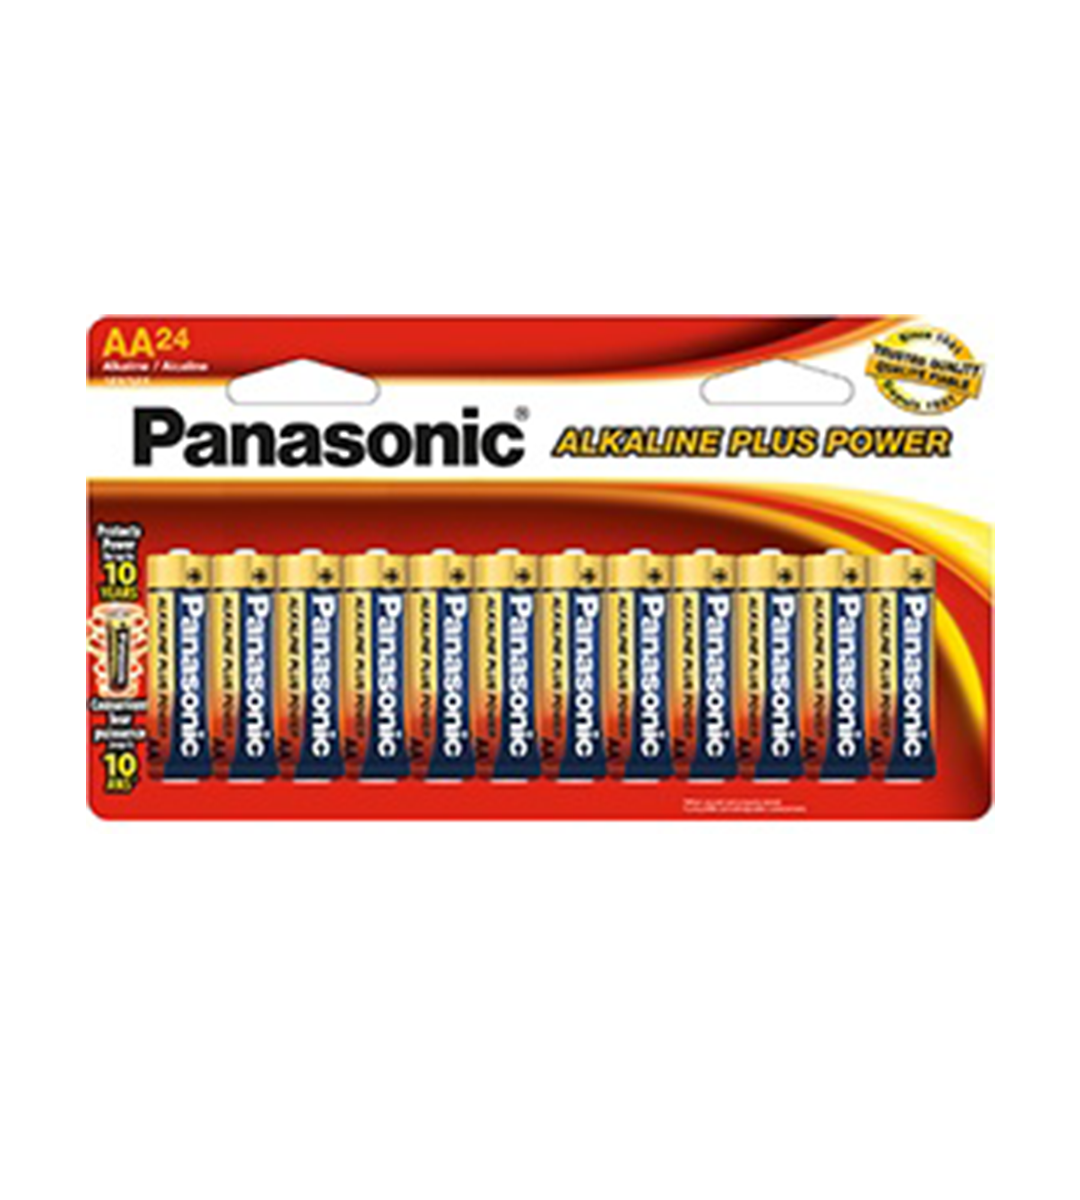 Panasonic AA Alkaline Plus Power Battery, LR6PA/24B (24 Pack)